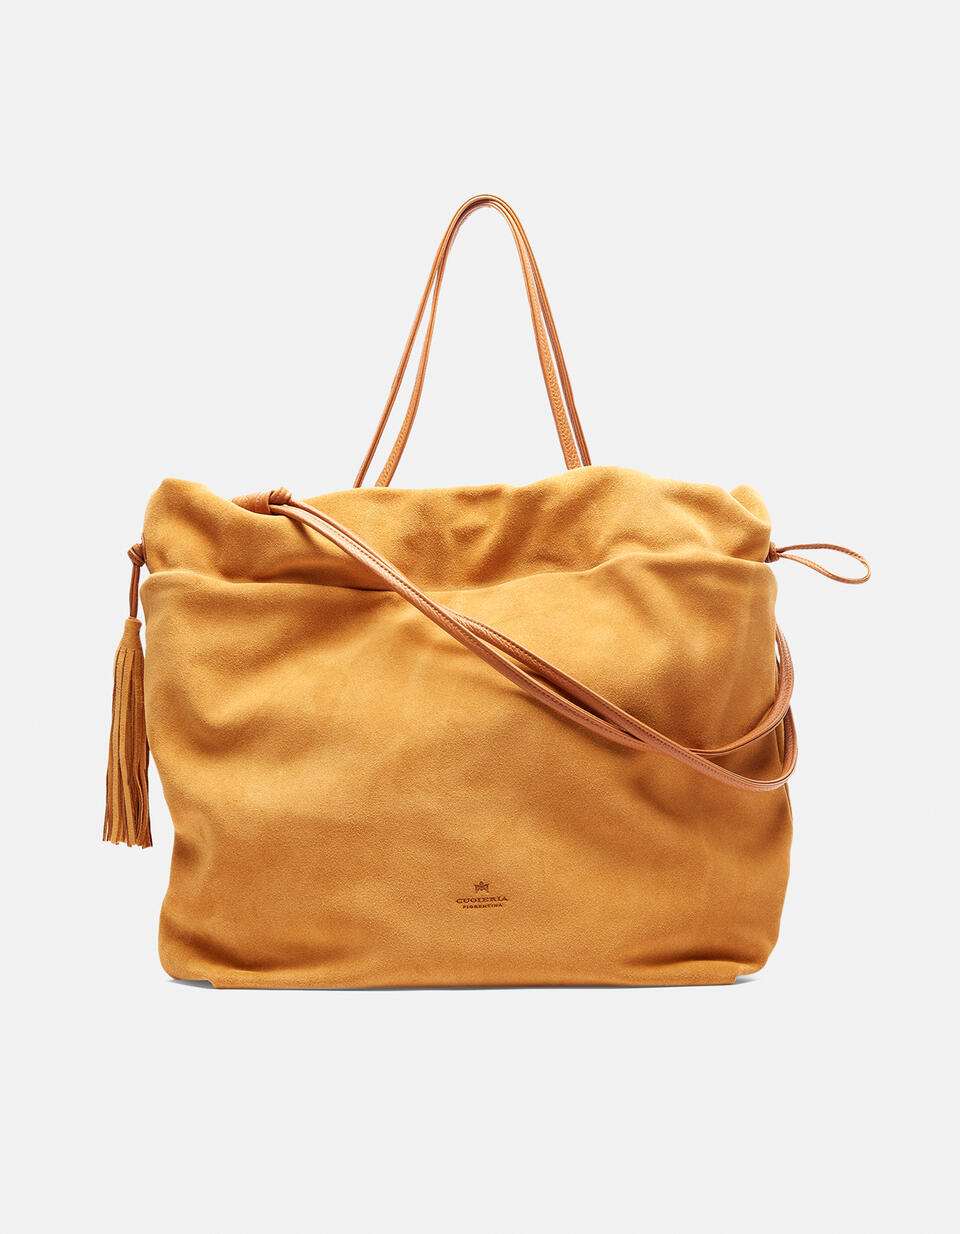 Air Large shopping bag - SHOPPING - WOMEN'S BAGS | bags JEWEL - SHOPPING - WOMEN'S BAGS | bagsCuoieria Fiorentina